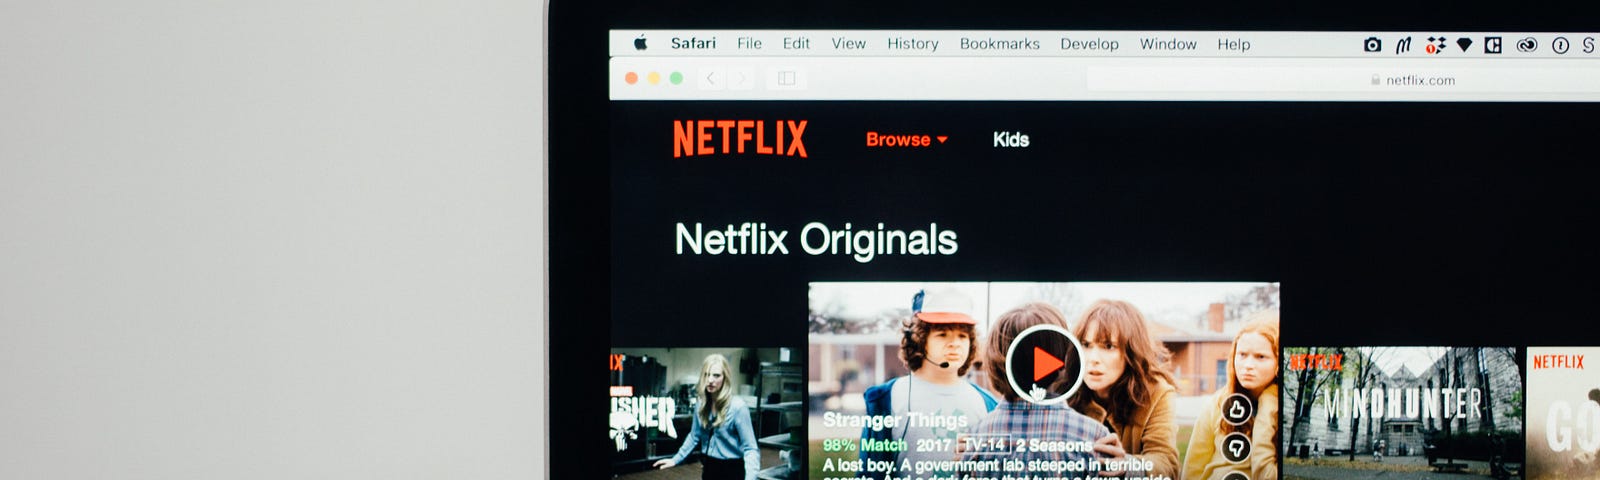 Browsing on Netflix Photo by Charles 🇵🇭 on Unsplash